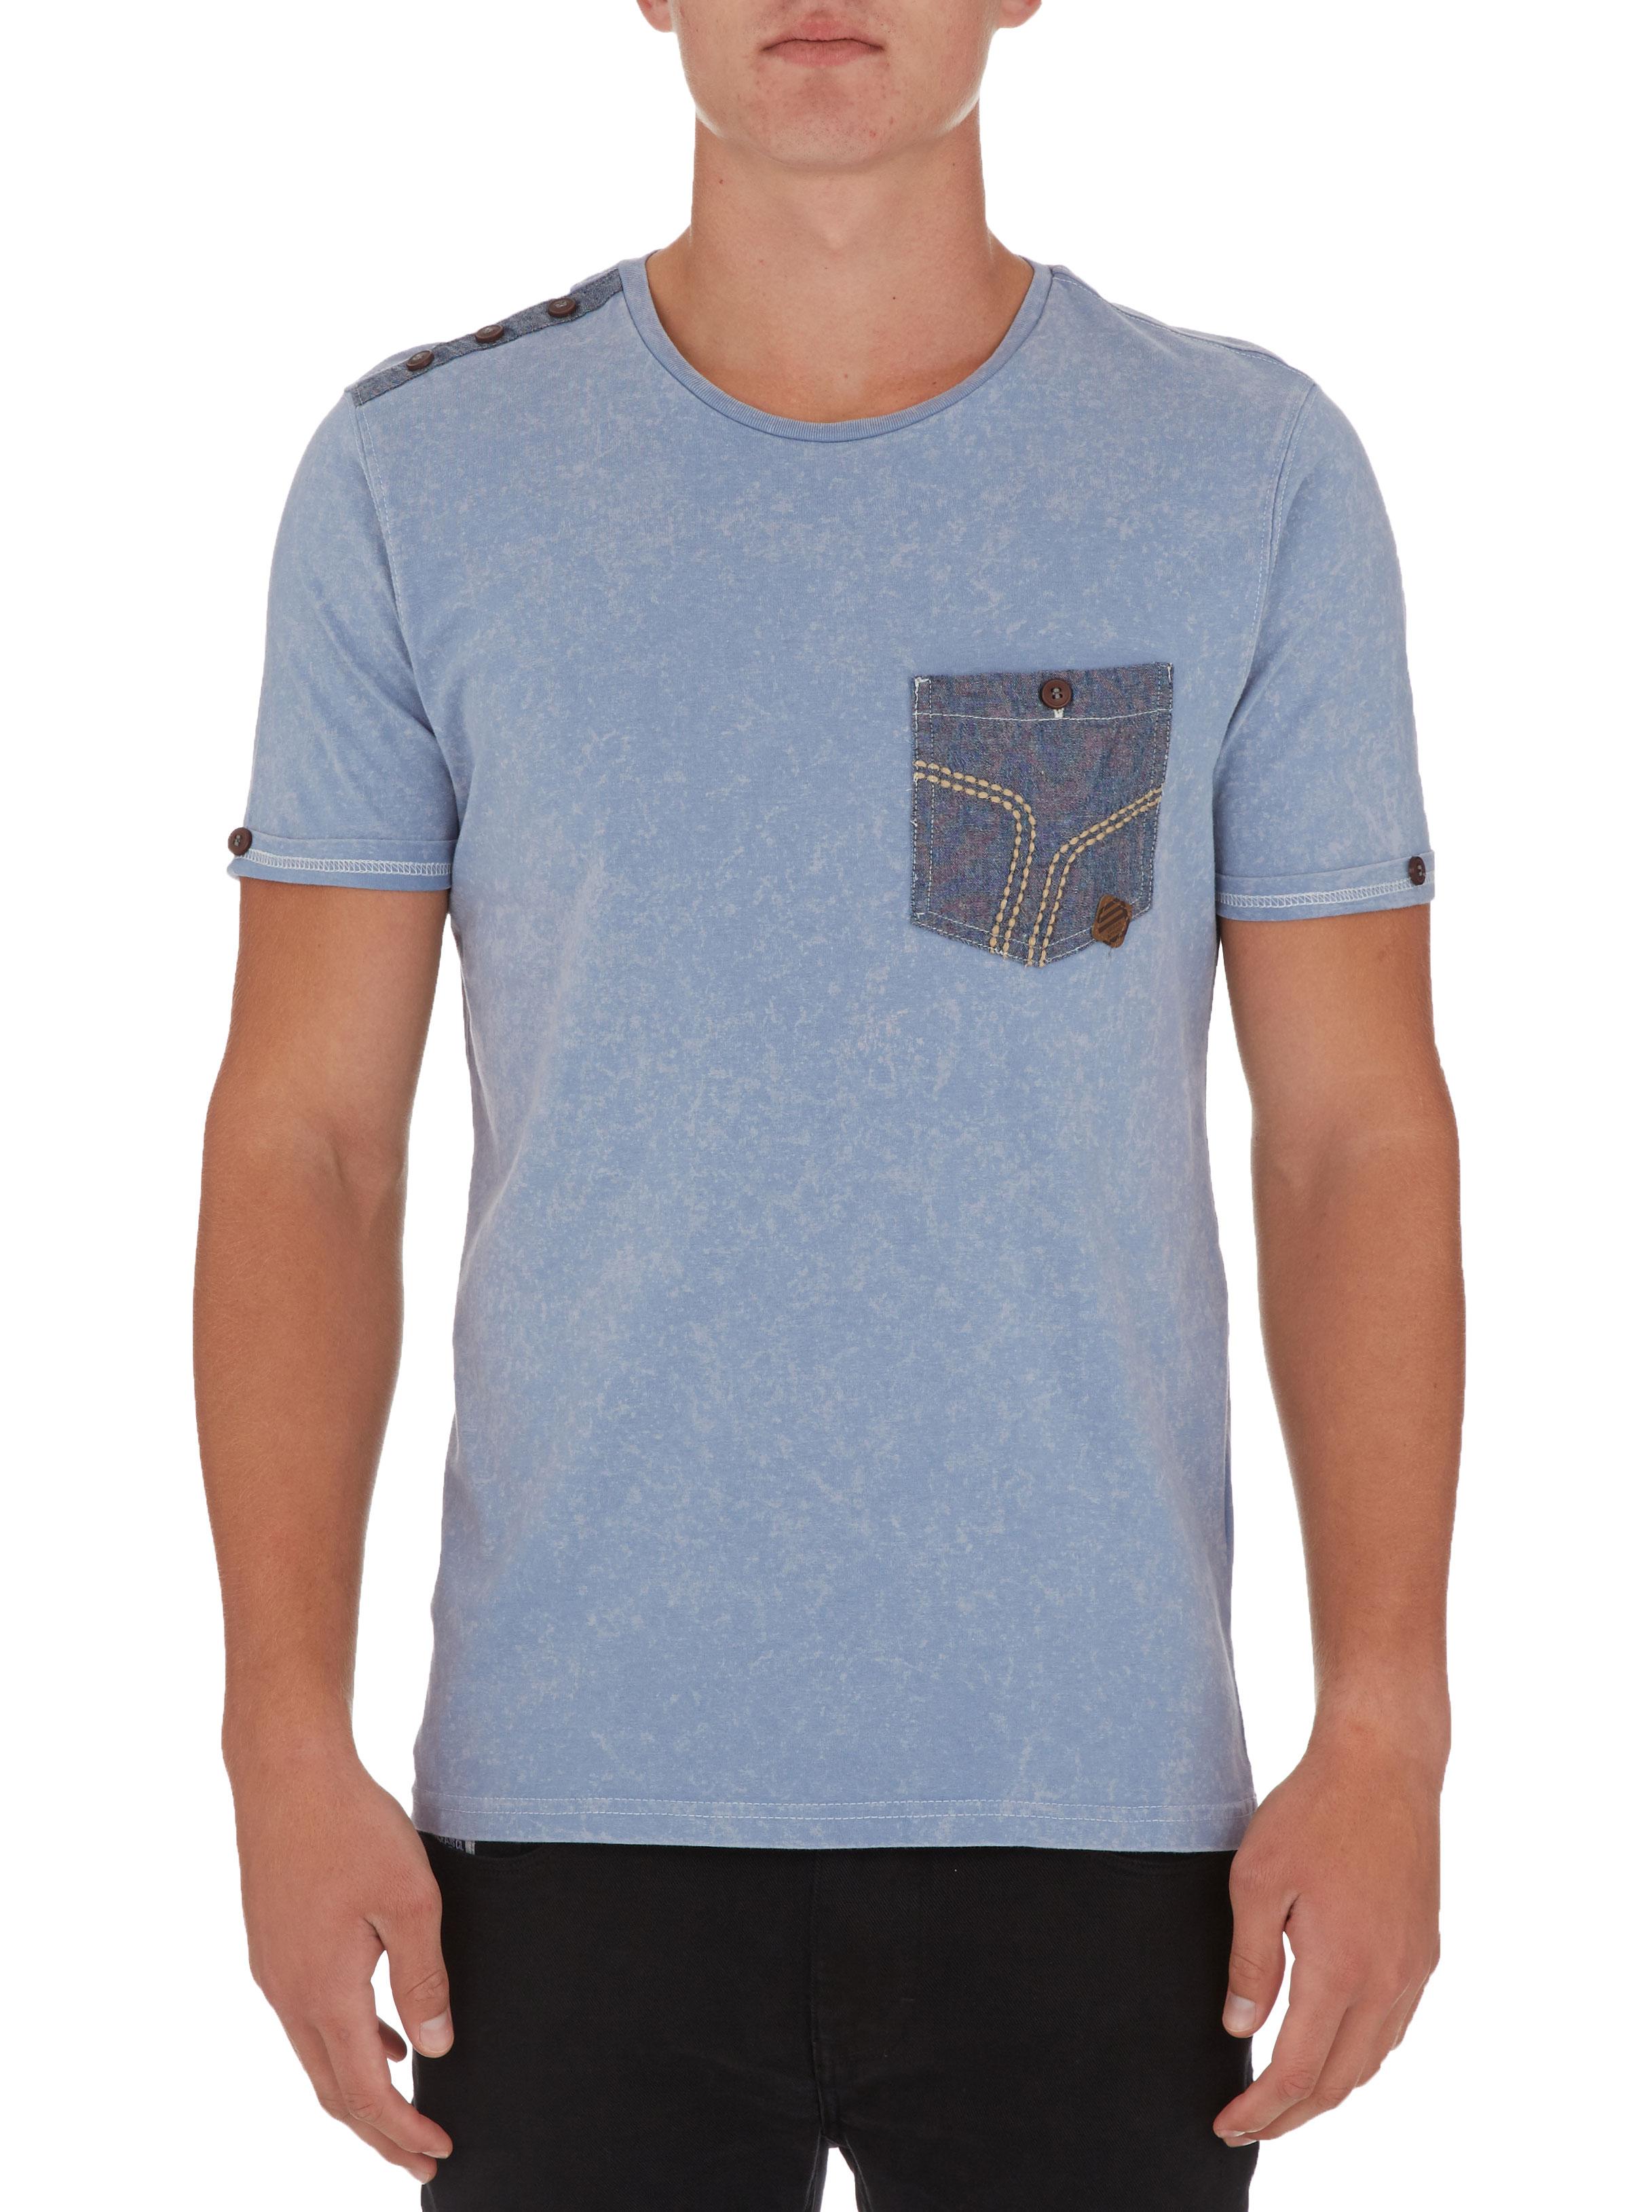 Pollard tee Pale Blue Smith & Jones T-Shirts & Vests | Superbalist.com